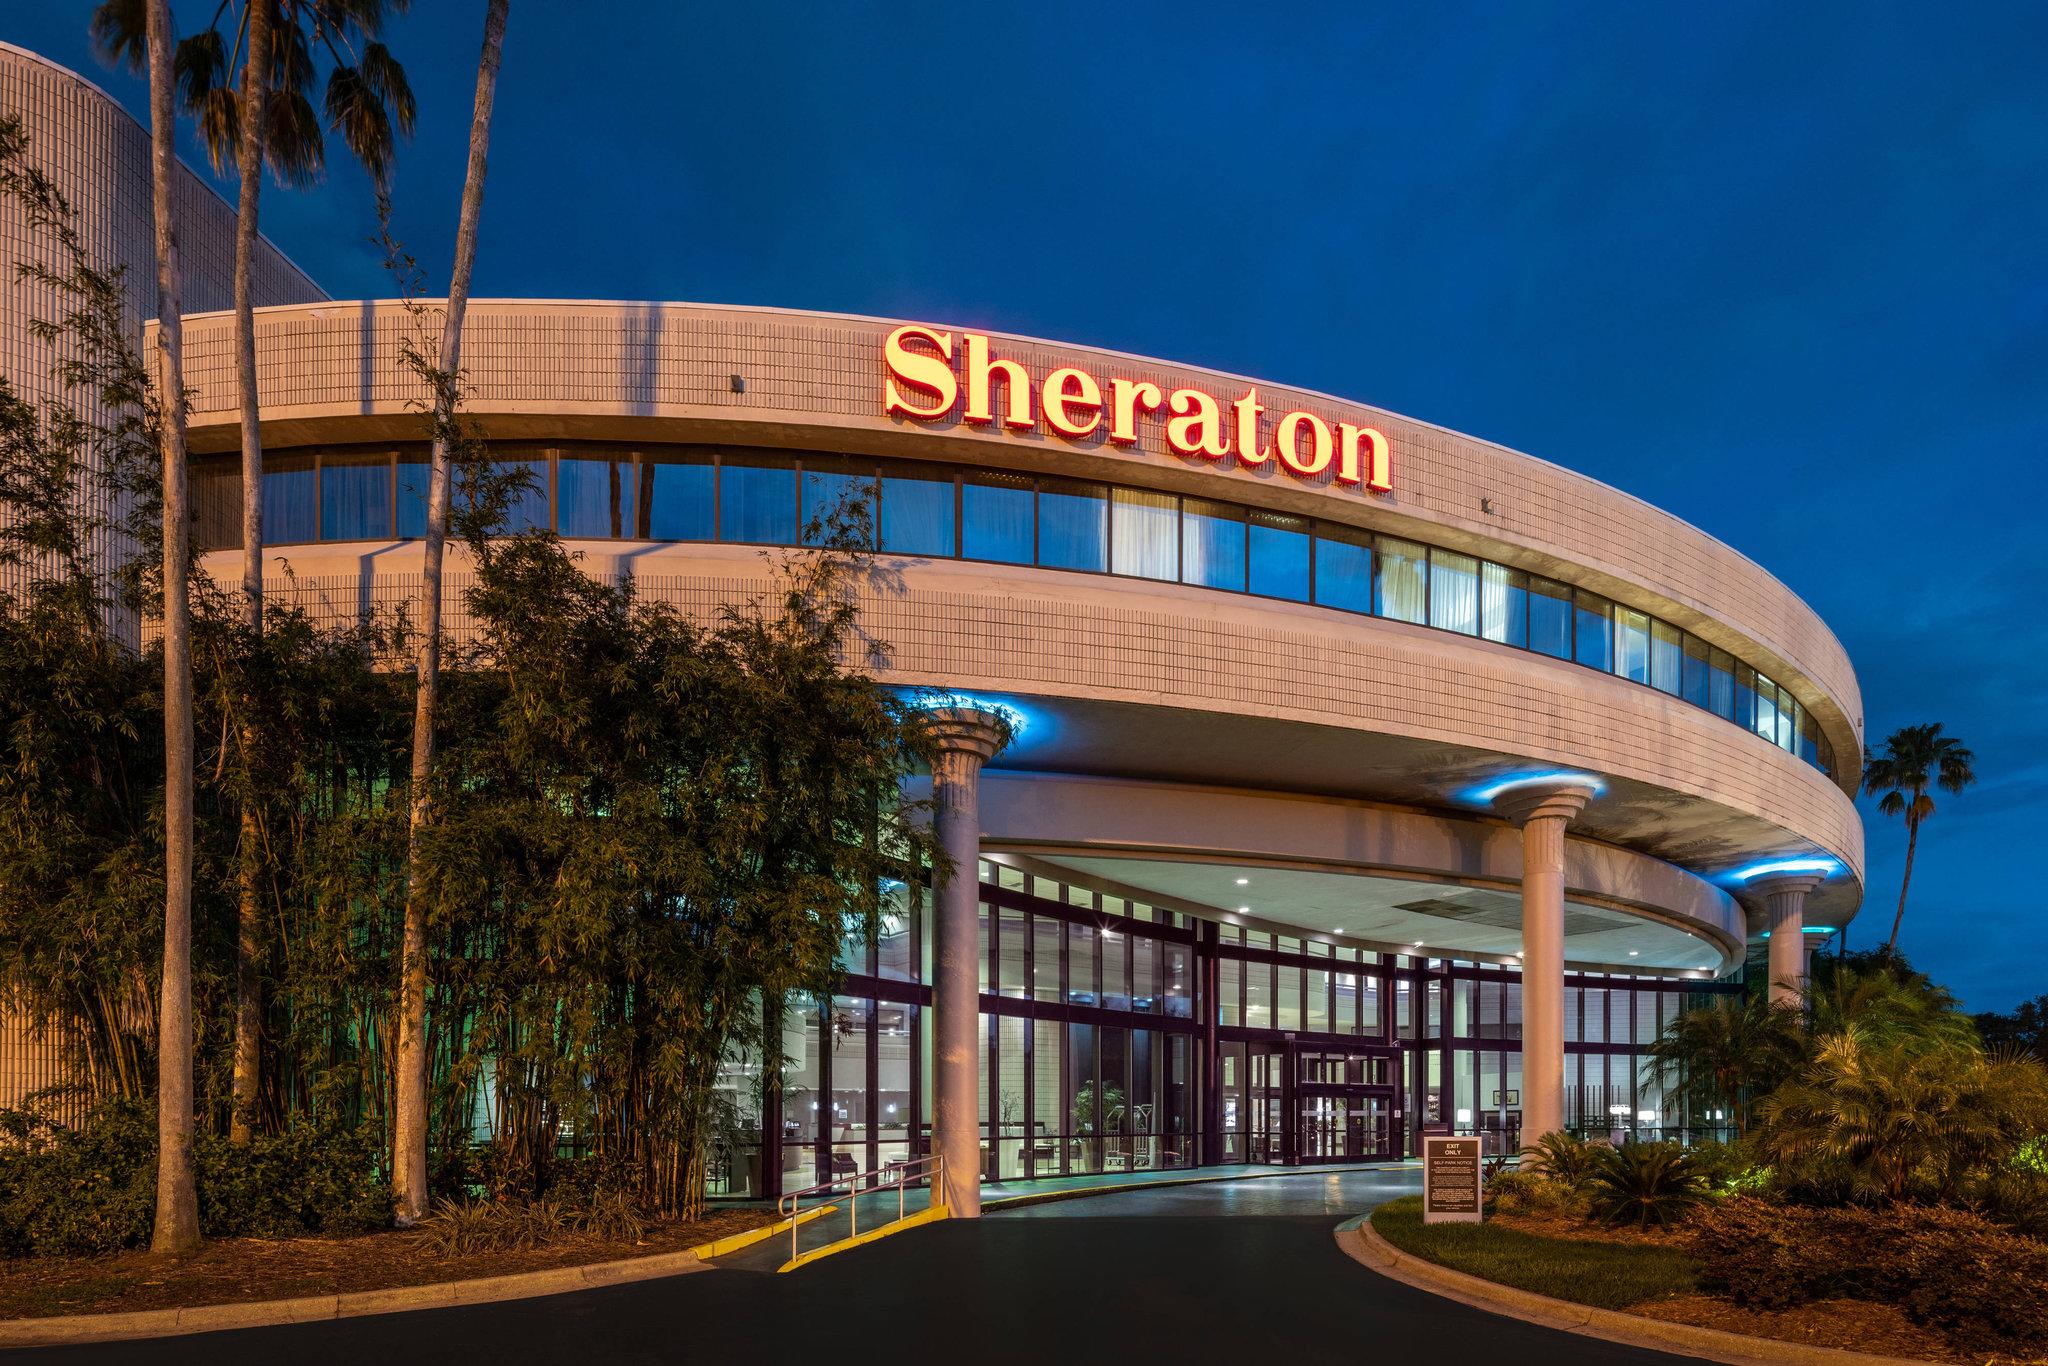 Sheraton Tampa Brandon Hotel in Tampa, FL